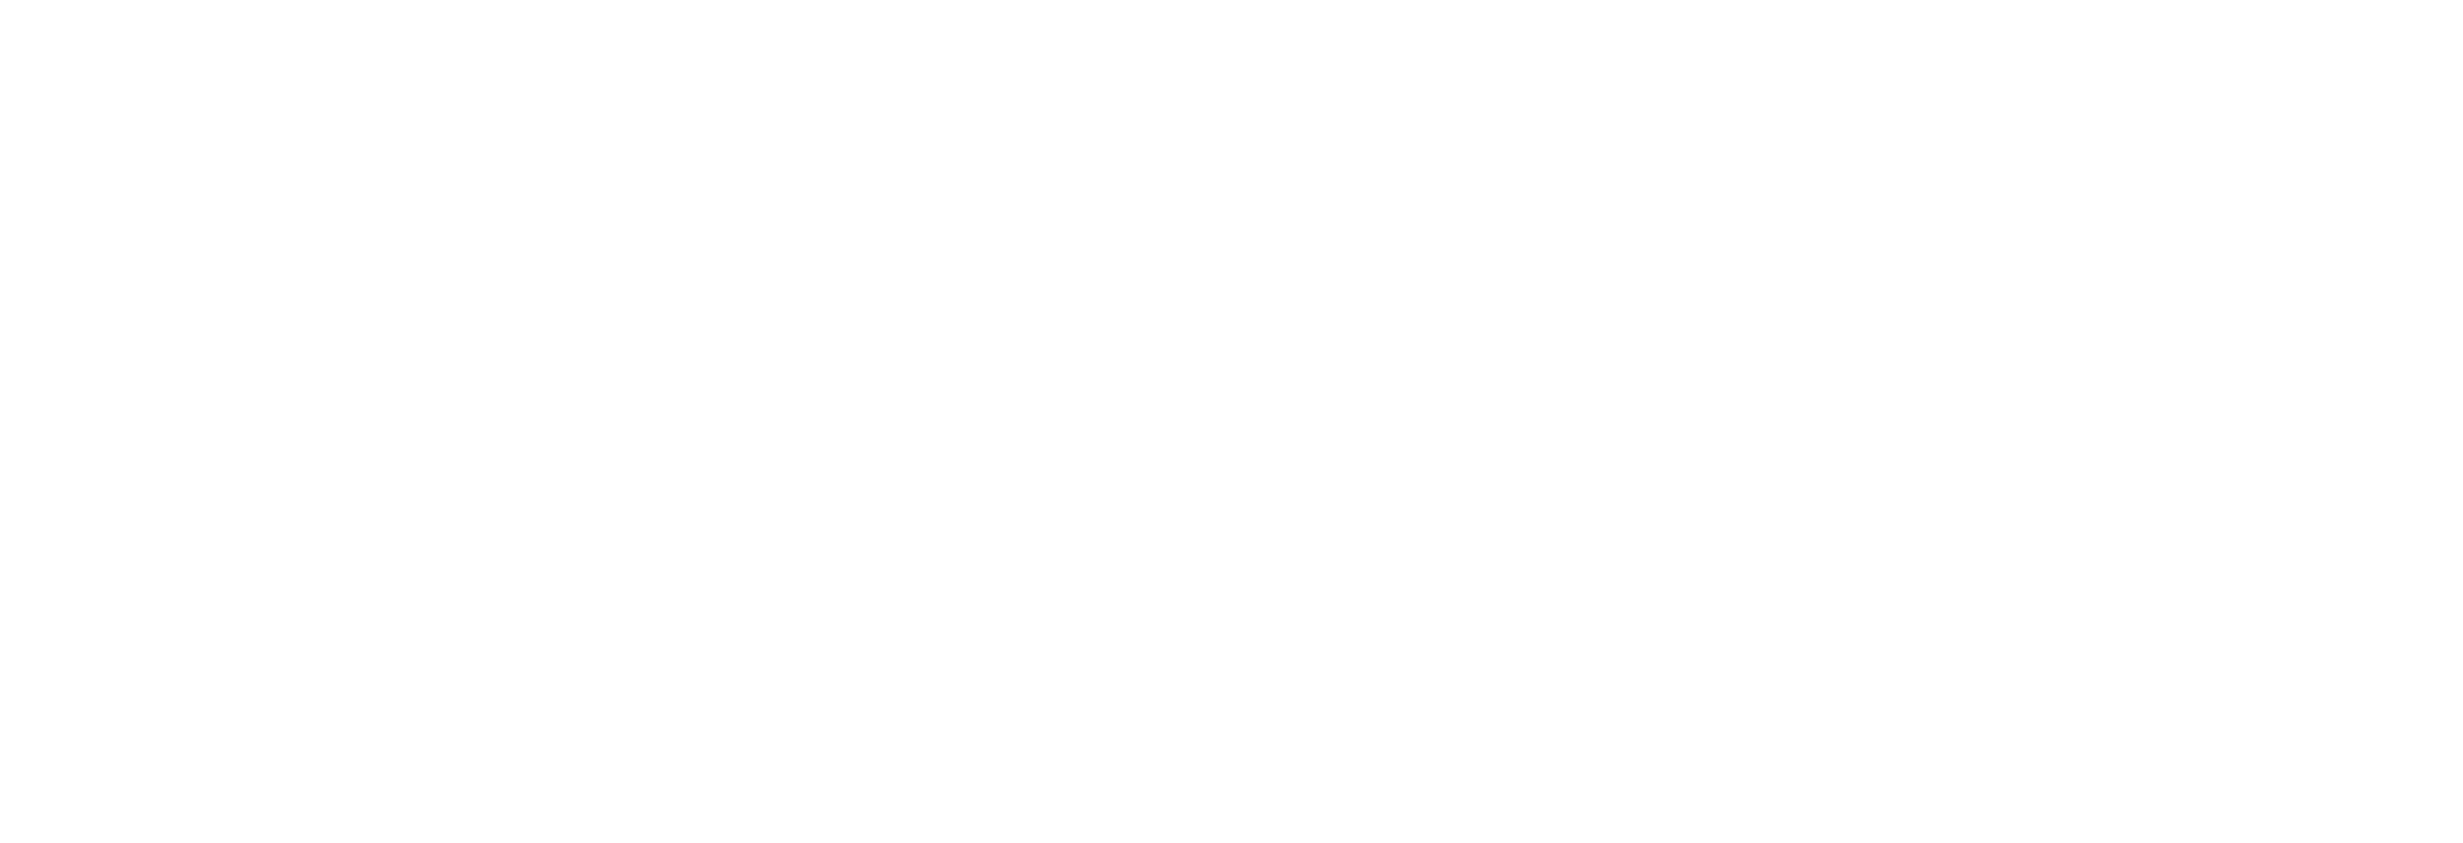 Princeton Pub & Grill